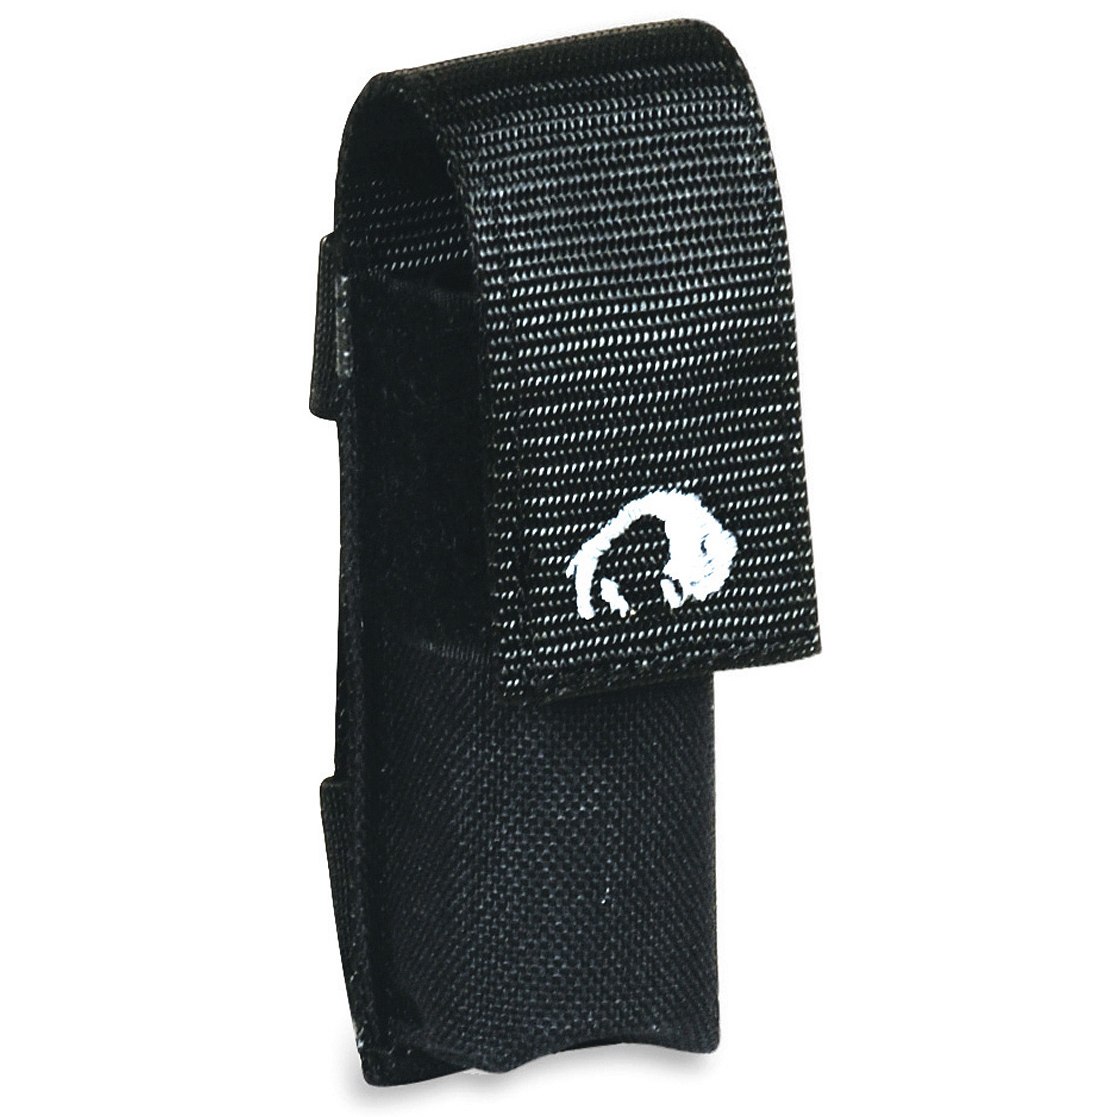 Productfoto van Tatonka Tool Pocket - Etui - zwart